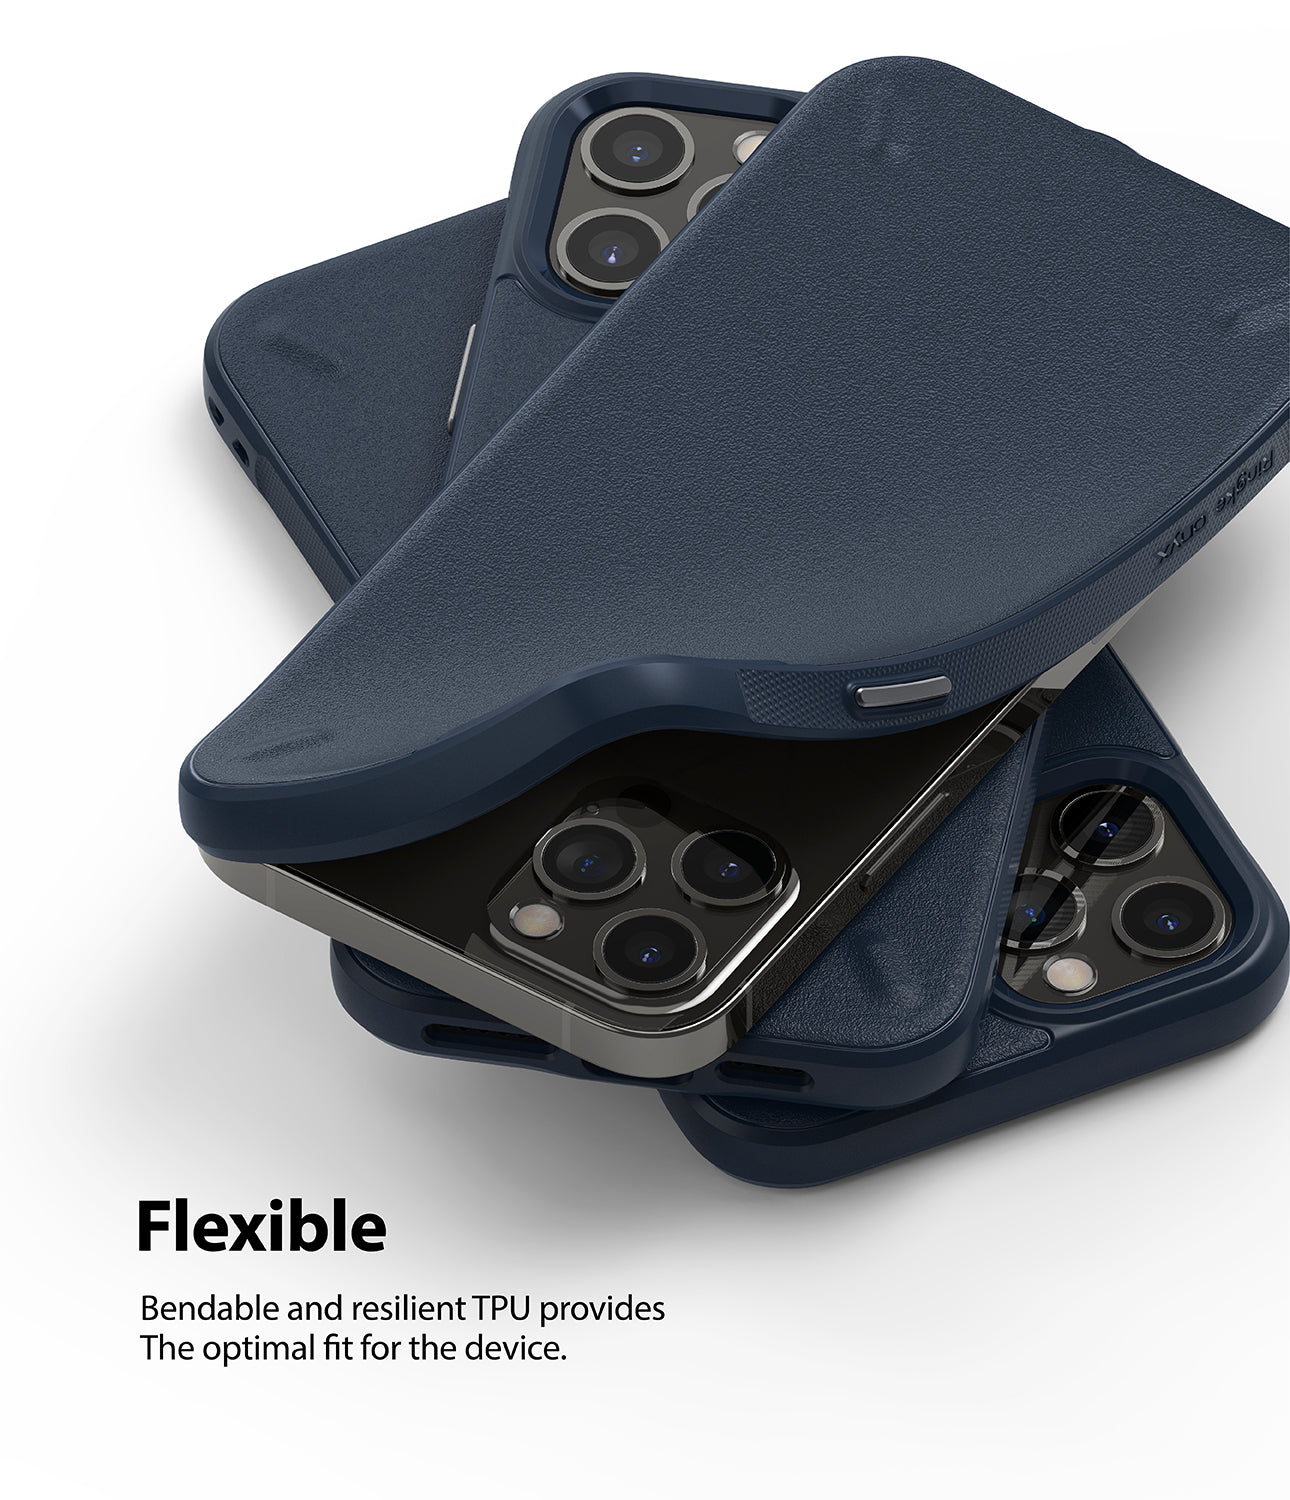 iPhone 12 Pro Max Case | Onyx